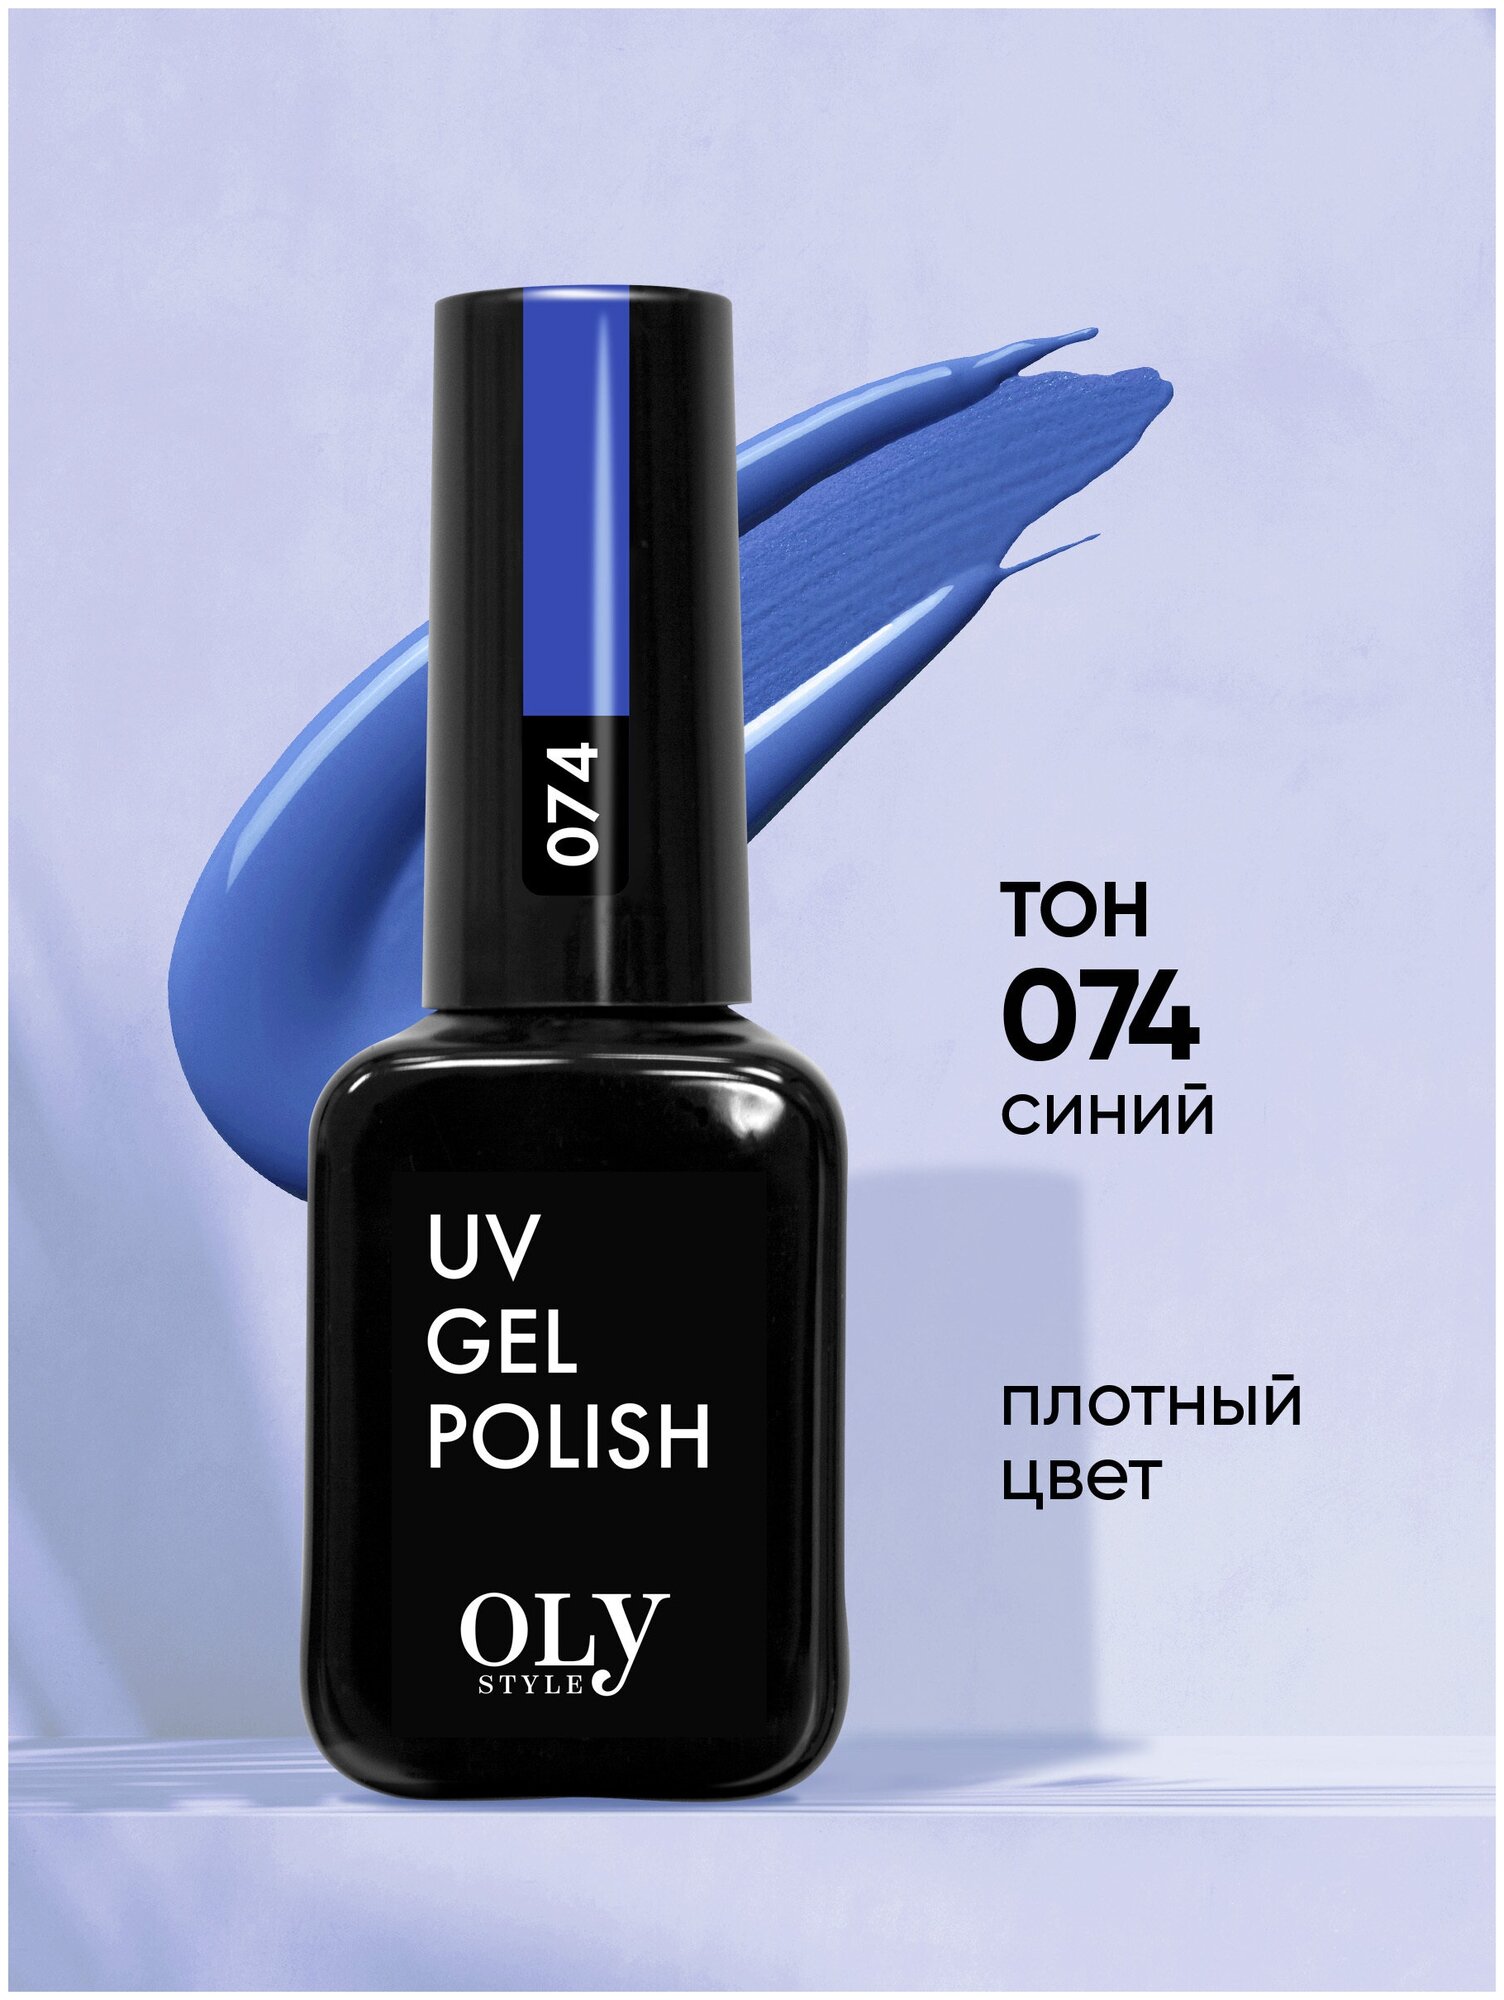 Olystyle Гель-лак для ногтей OLS UV, тон 074 синий, 10мл